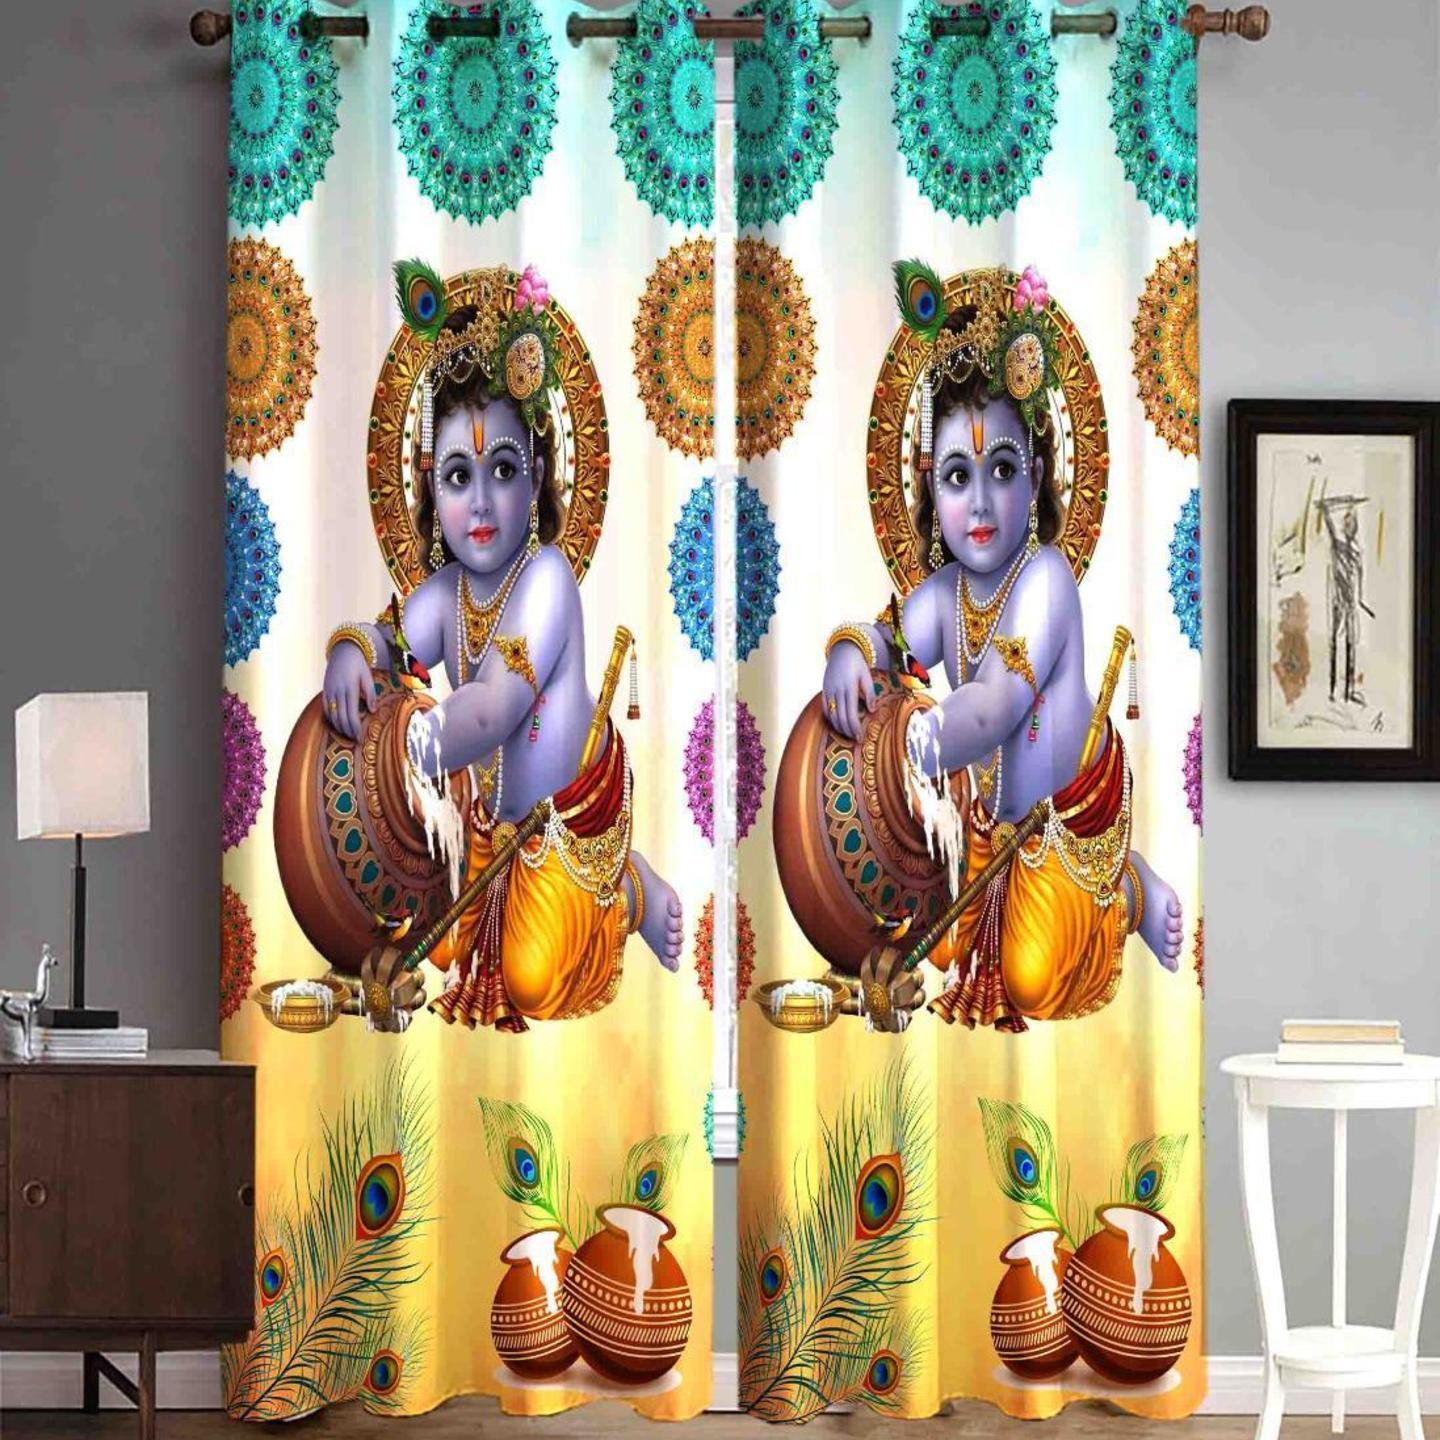 Handtex Home Digital Printed Curtain 3D Themed Polyester Curtains for Home Decor  Eyelet Grommet Panels for Living Room Balcony Bedroom, 4 x 7 Feet,Set of 2pcs Krishna Ji